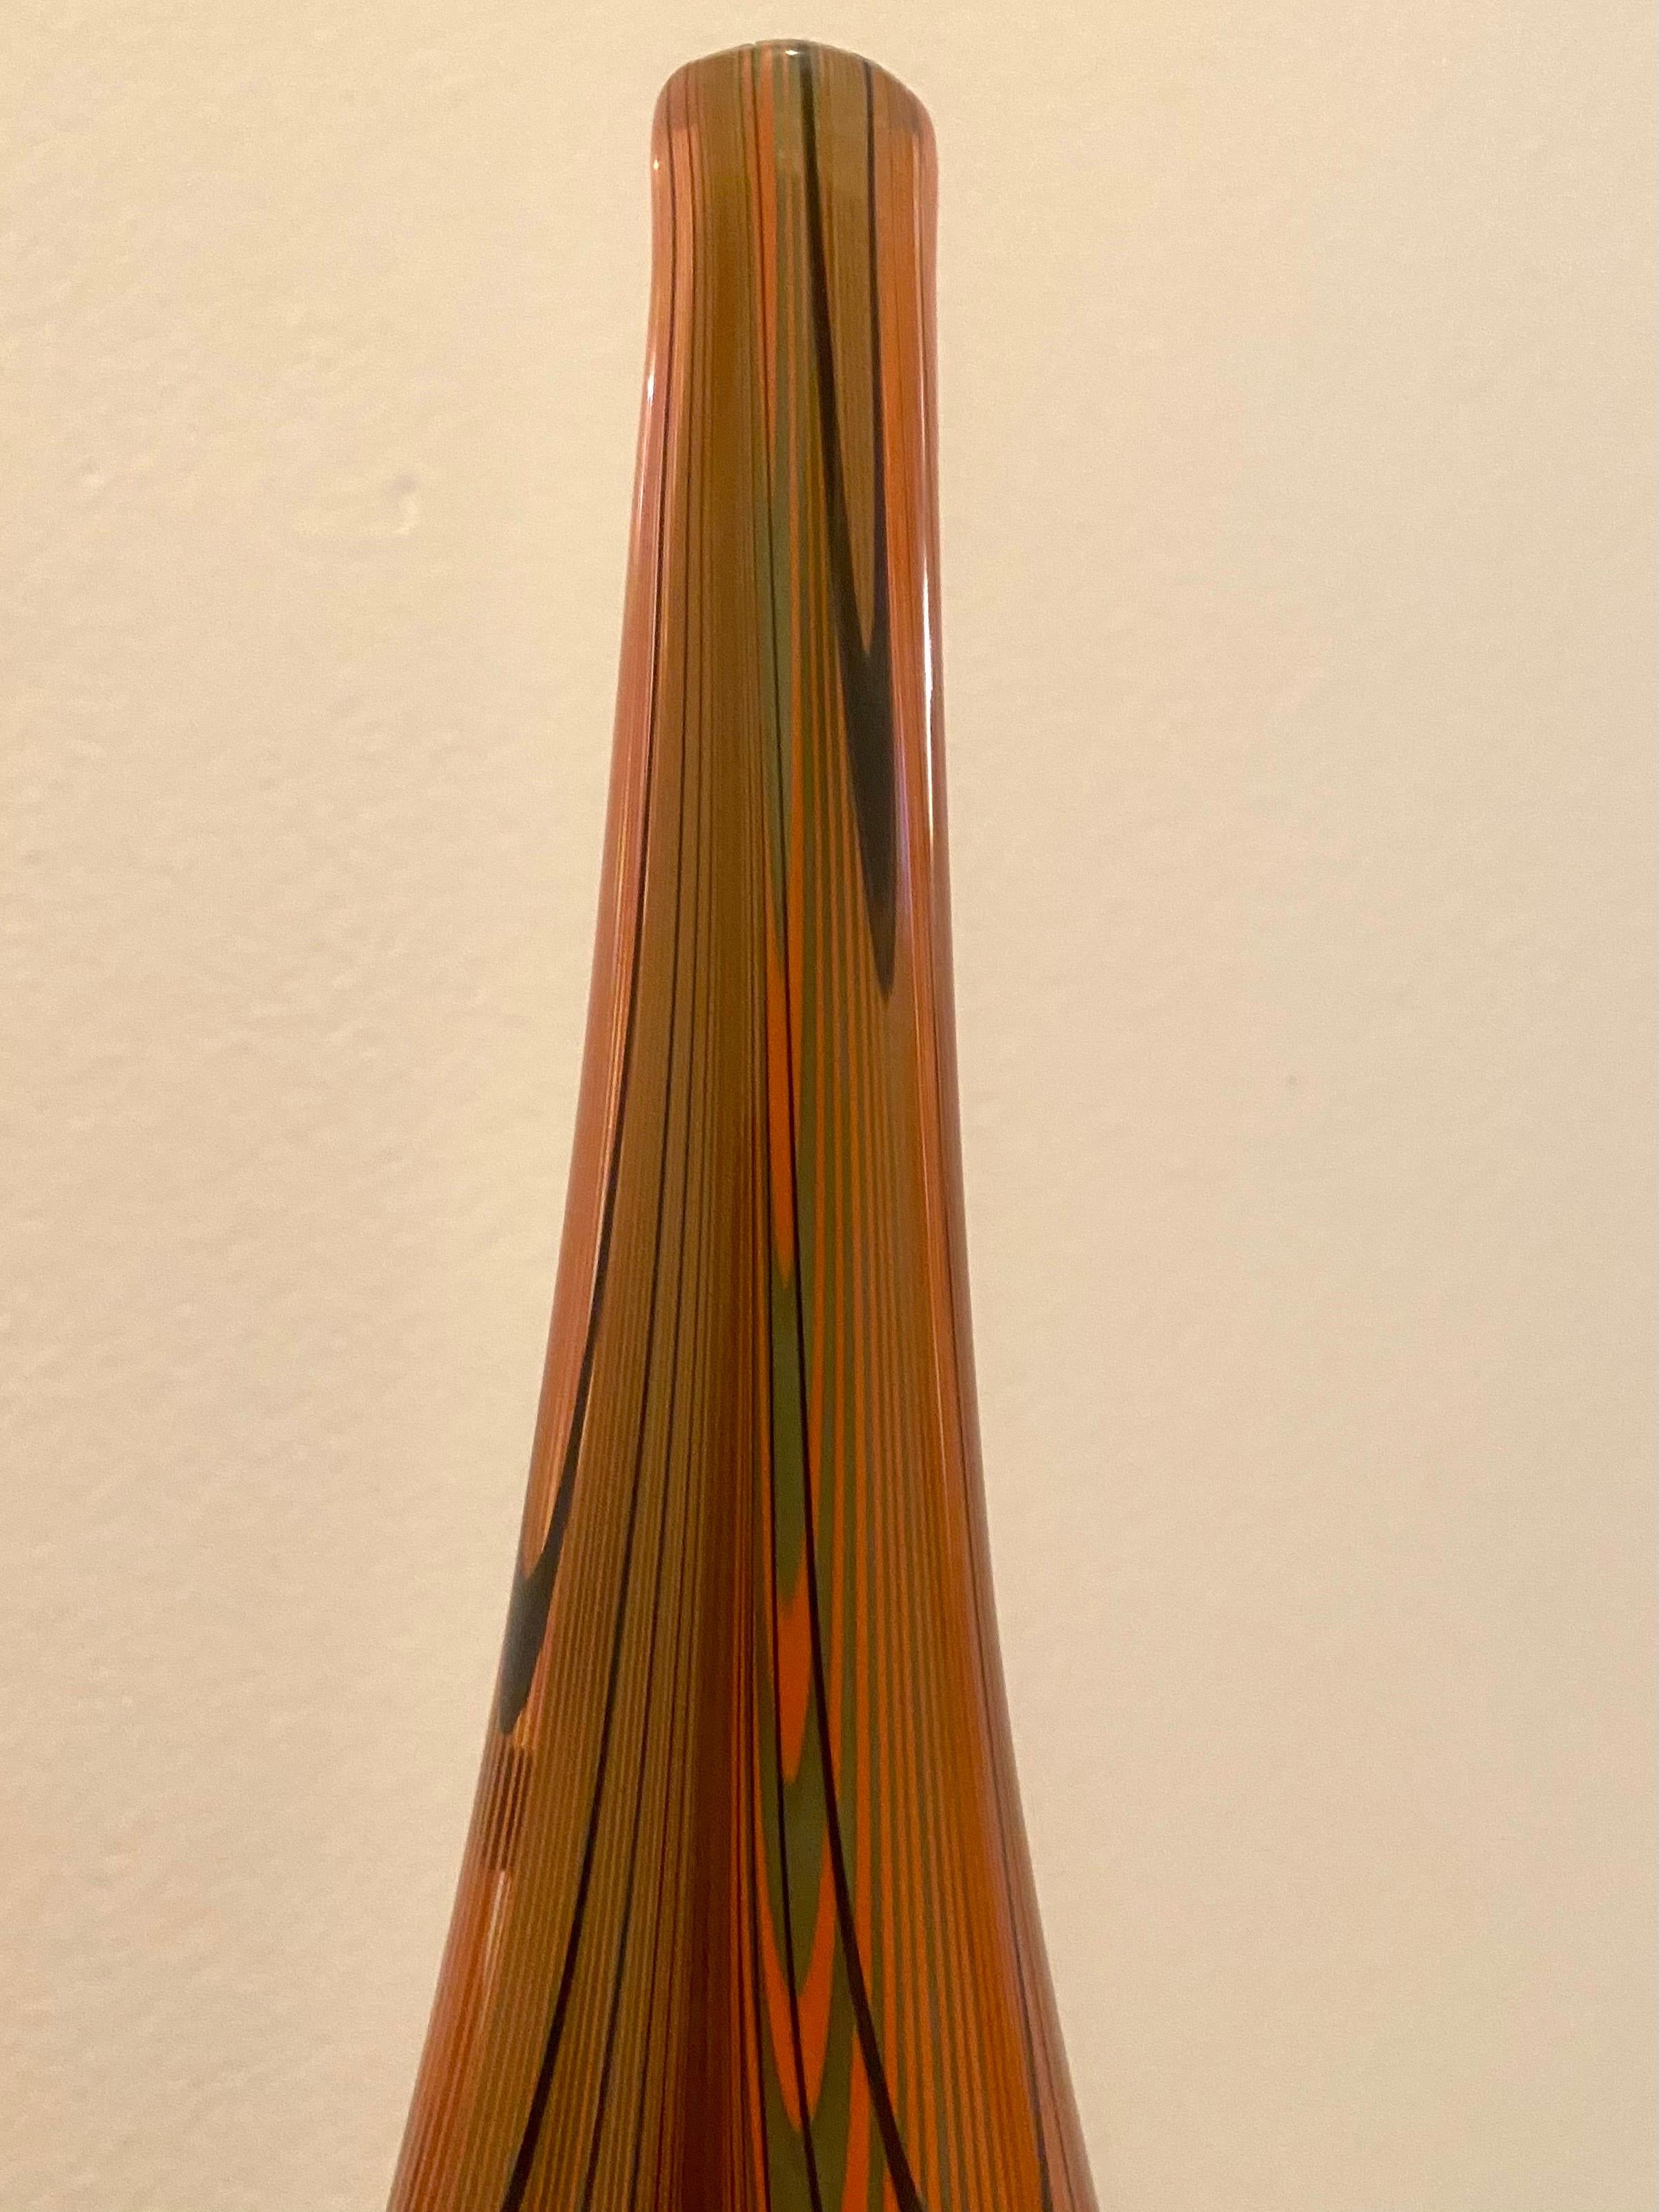 Alberto Dona Tall Feather Murano Glass Vase, Signed 2